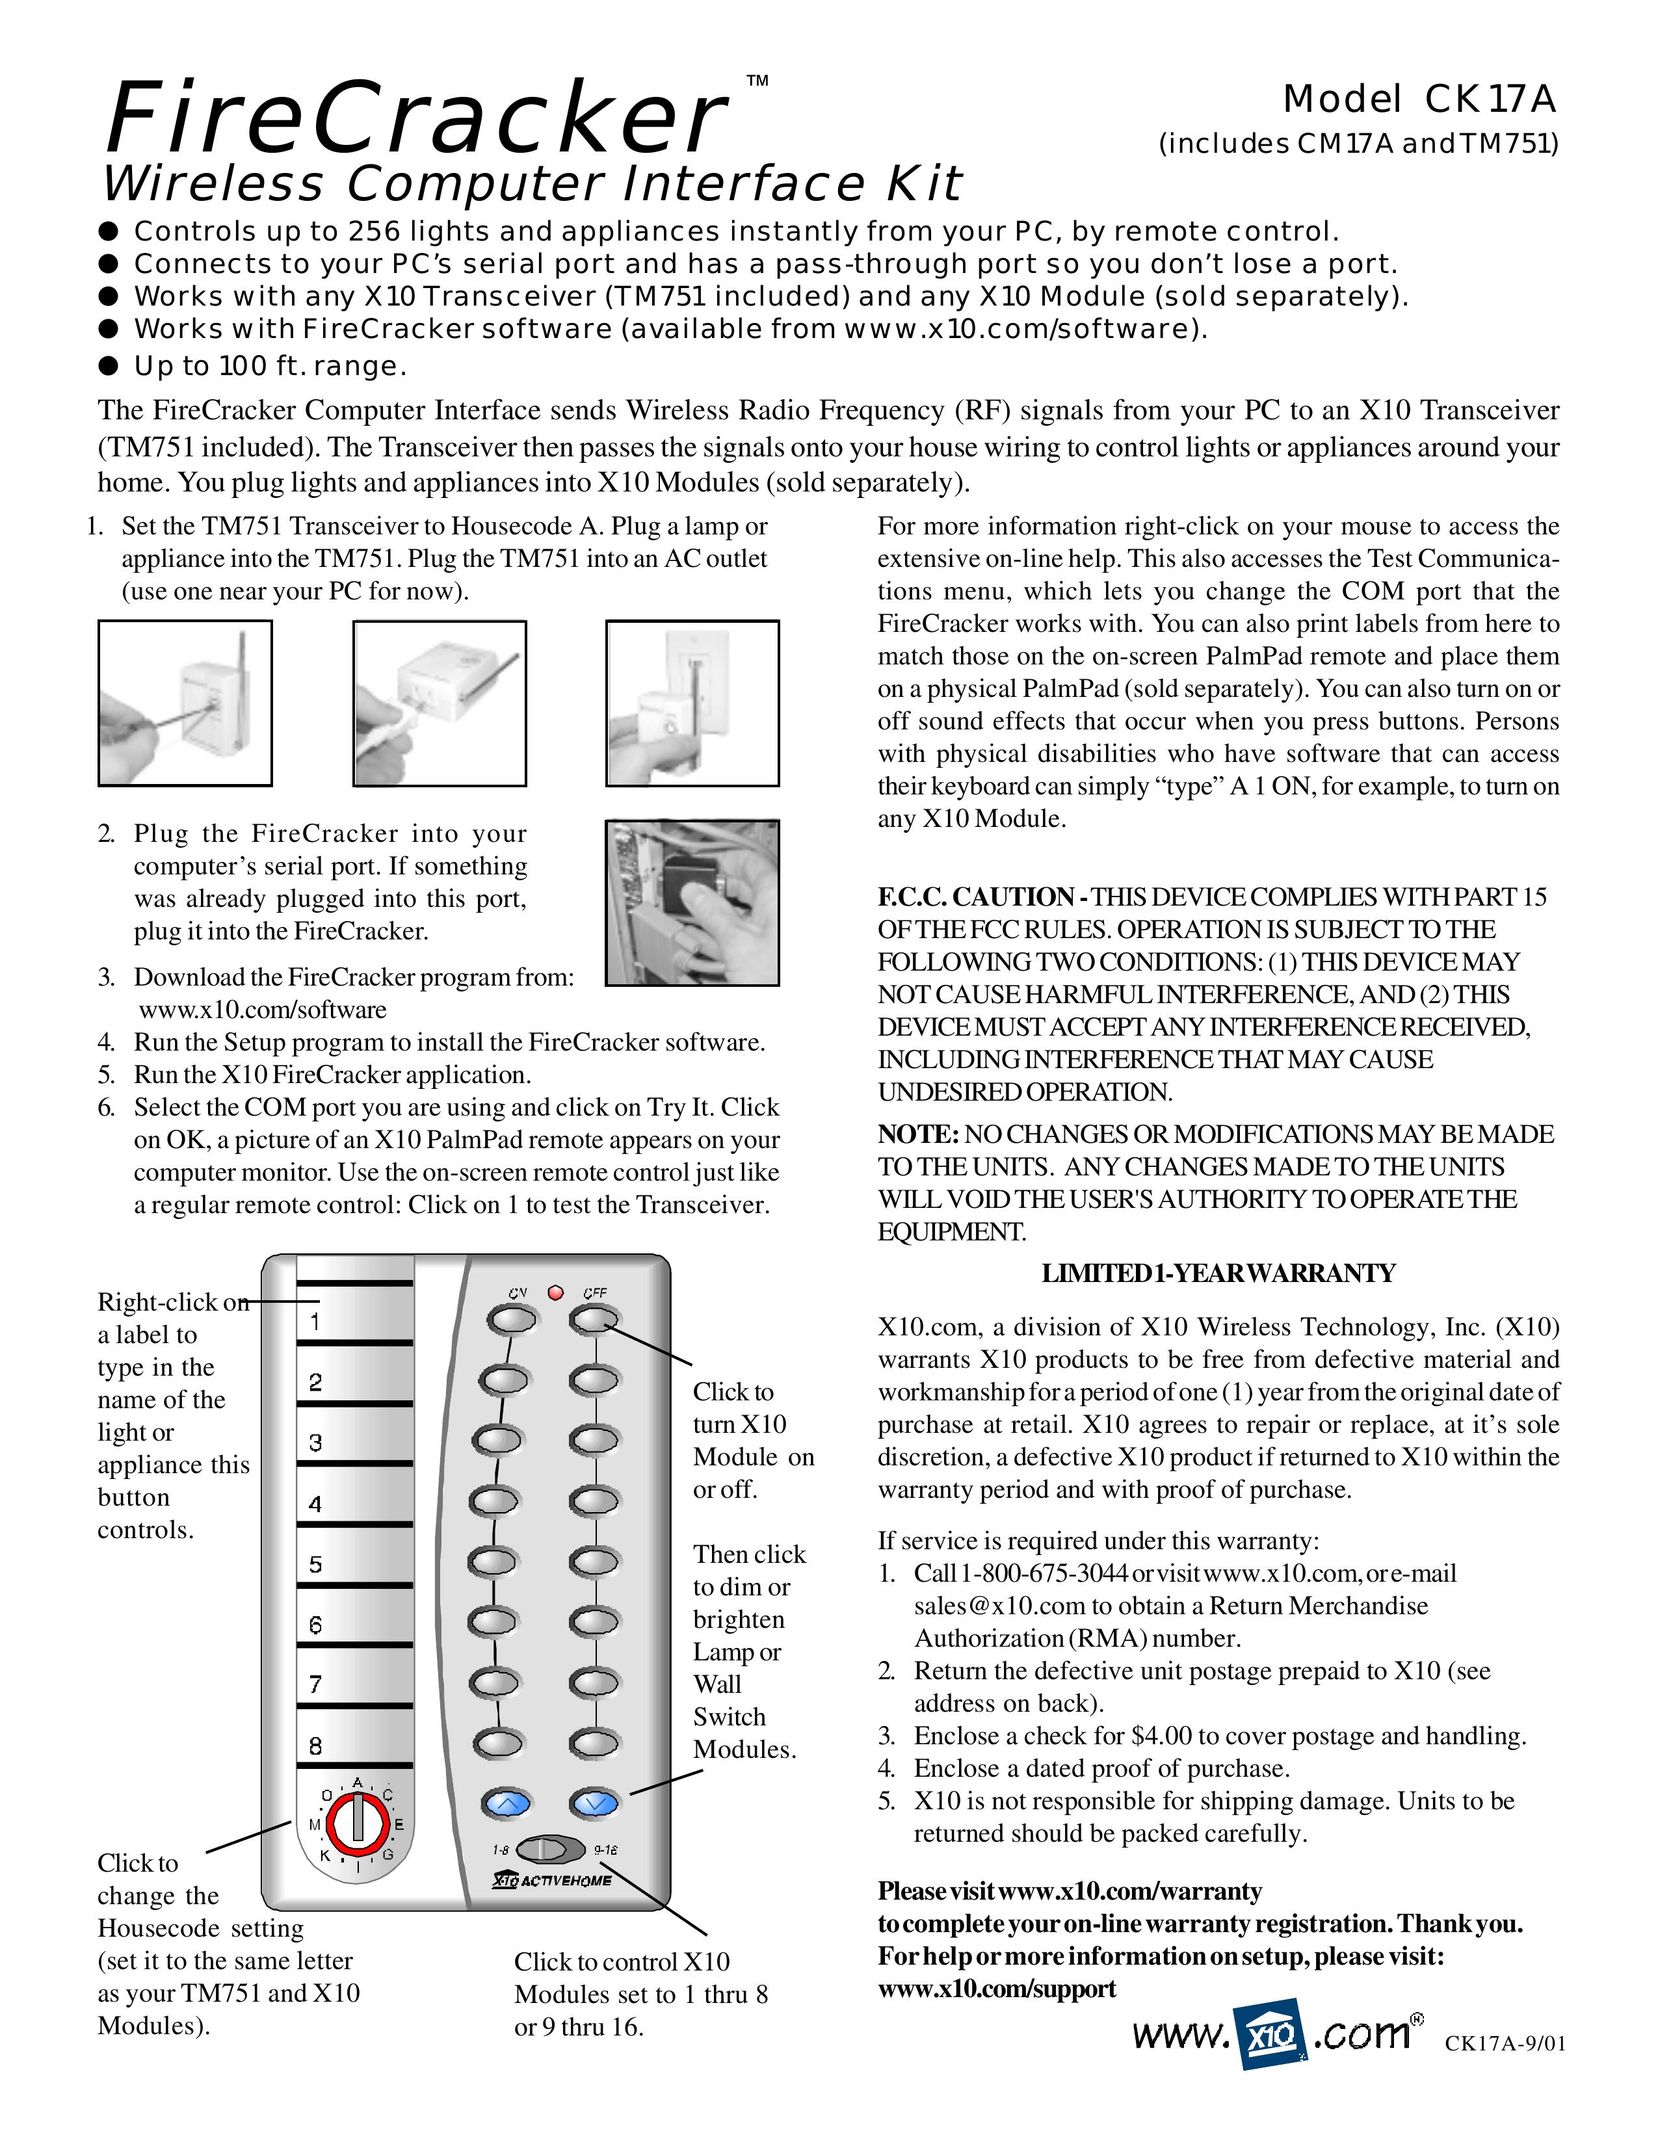 X10 Wireless Technology CM17A Network Card User Manual